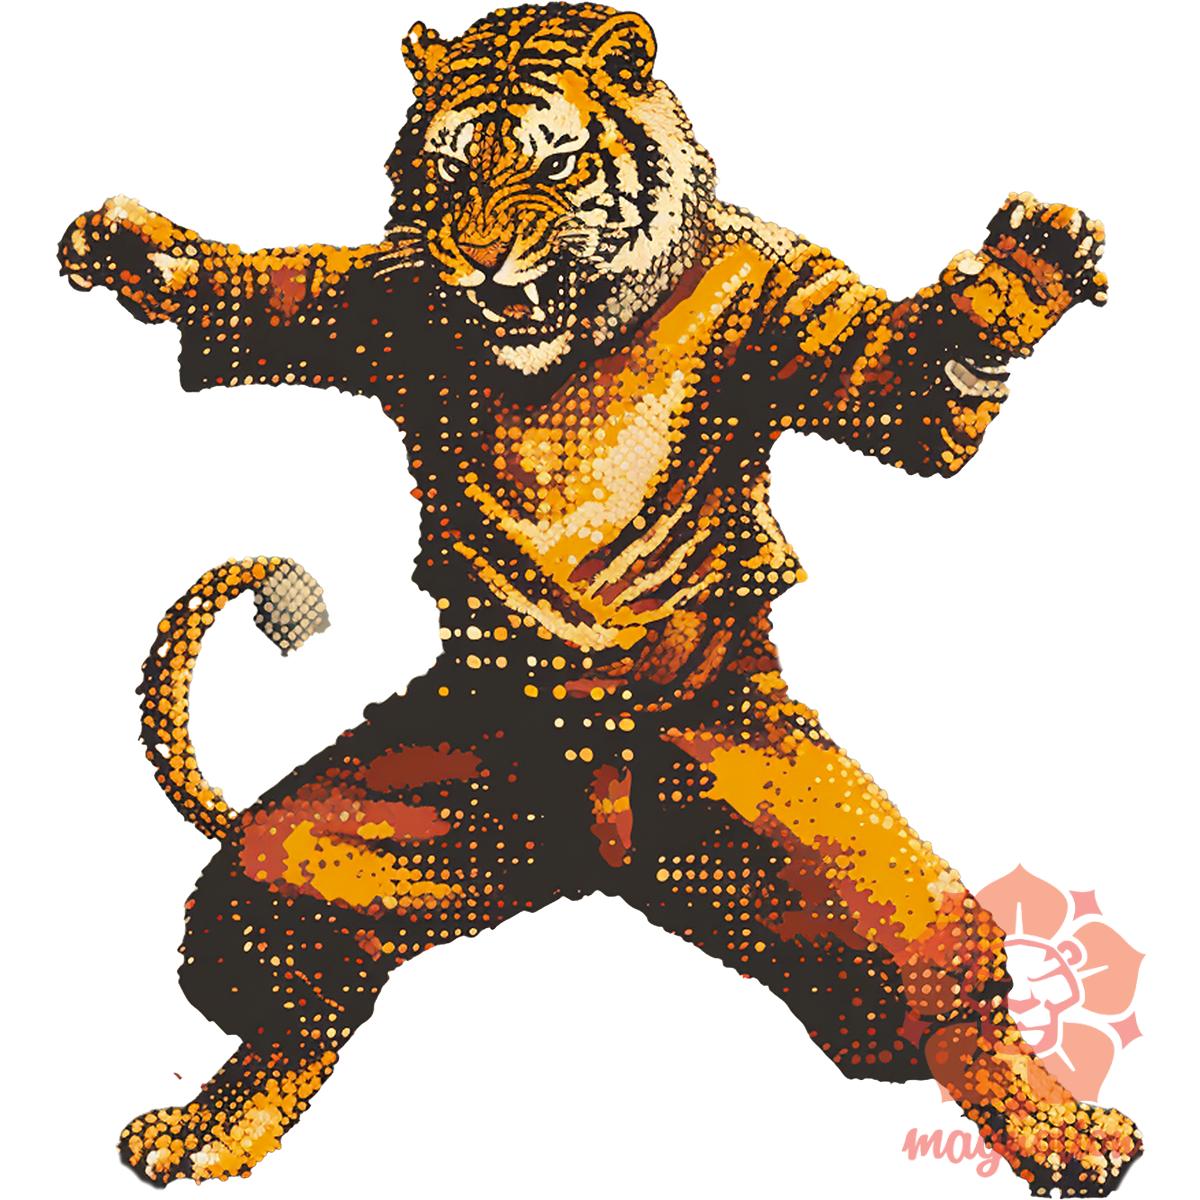 Pixelart kung fu tigris v1